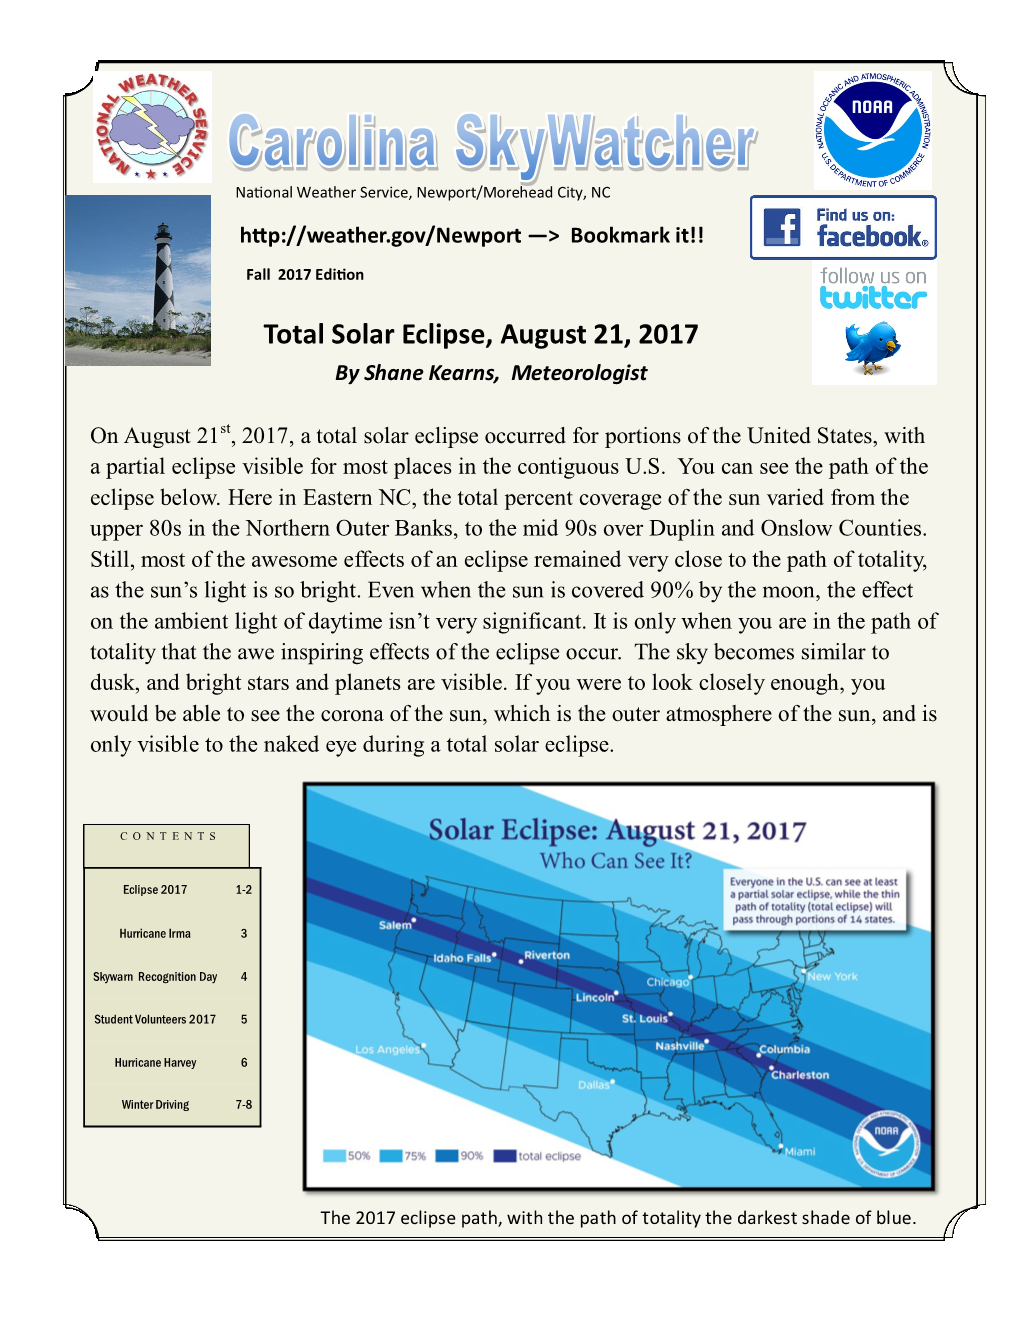 Total Solar Eclipse, August 21, 2017 by Shane Kearns, Meteorologist